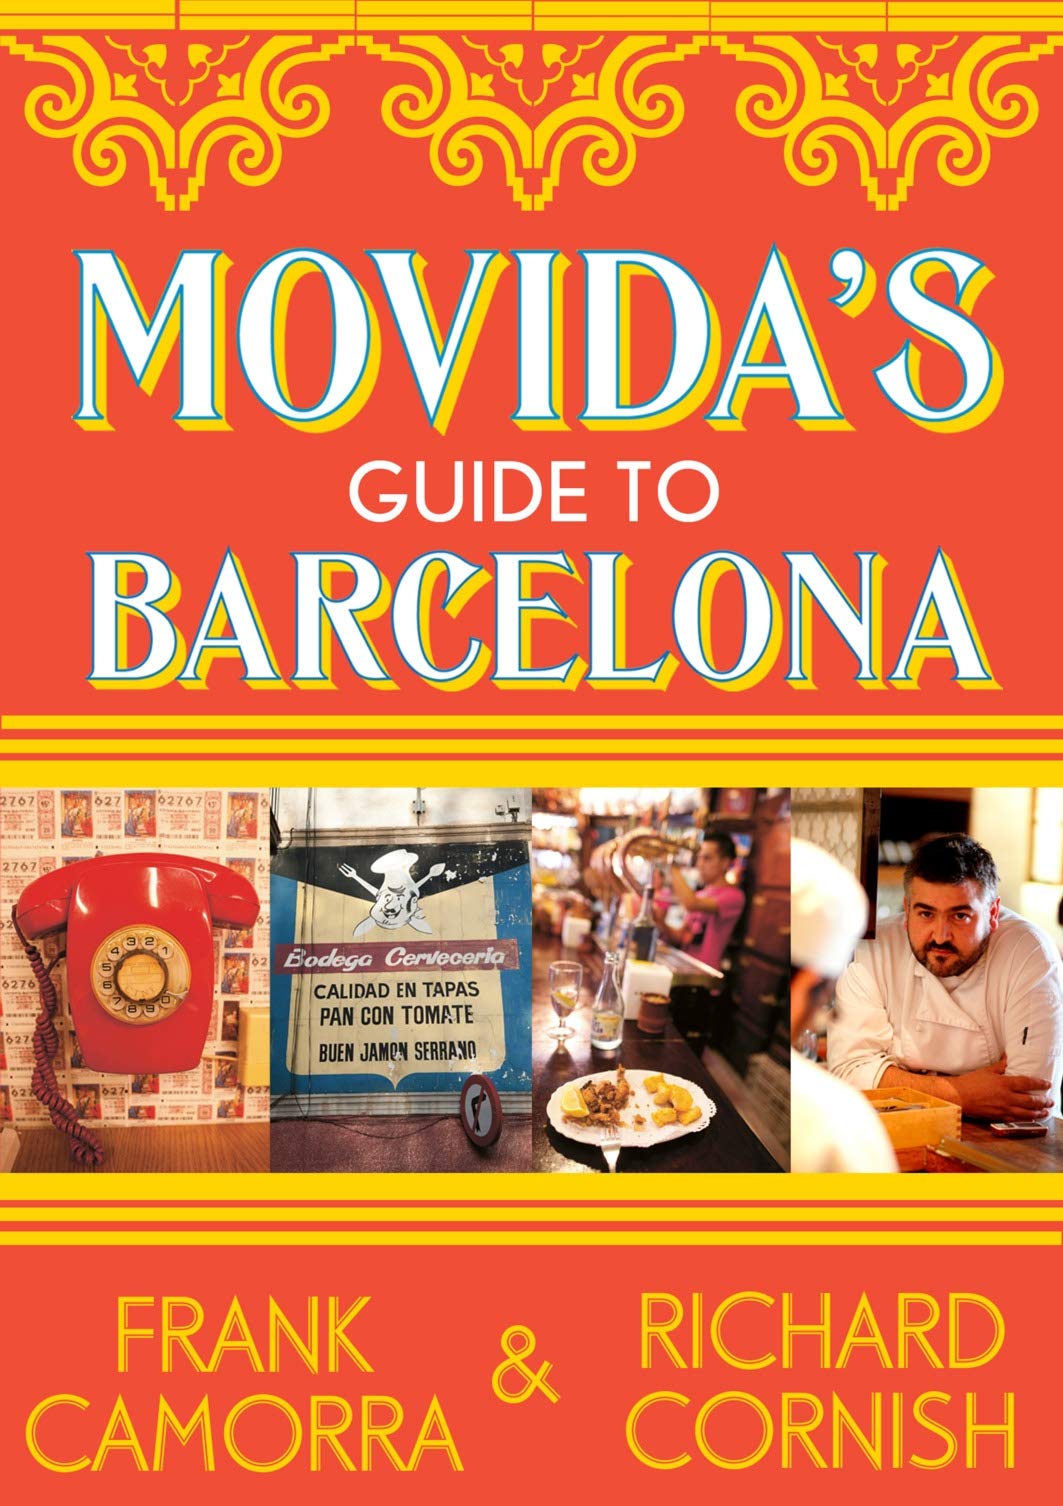 Movida's Guide to Barcelona (Frank Camorra, Richard Cornish)